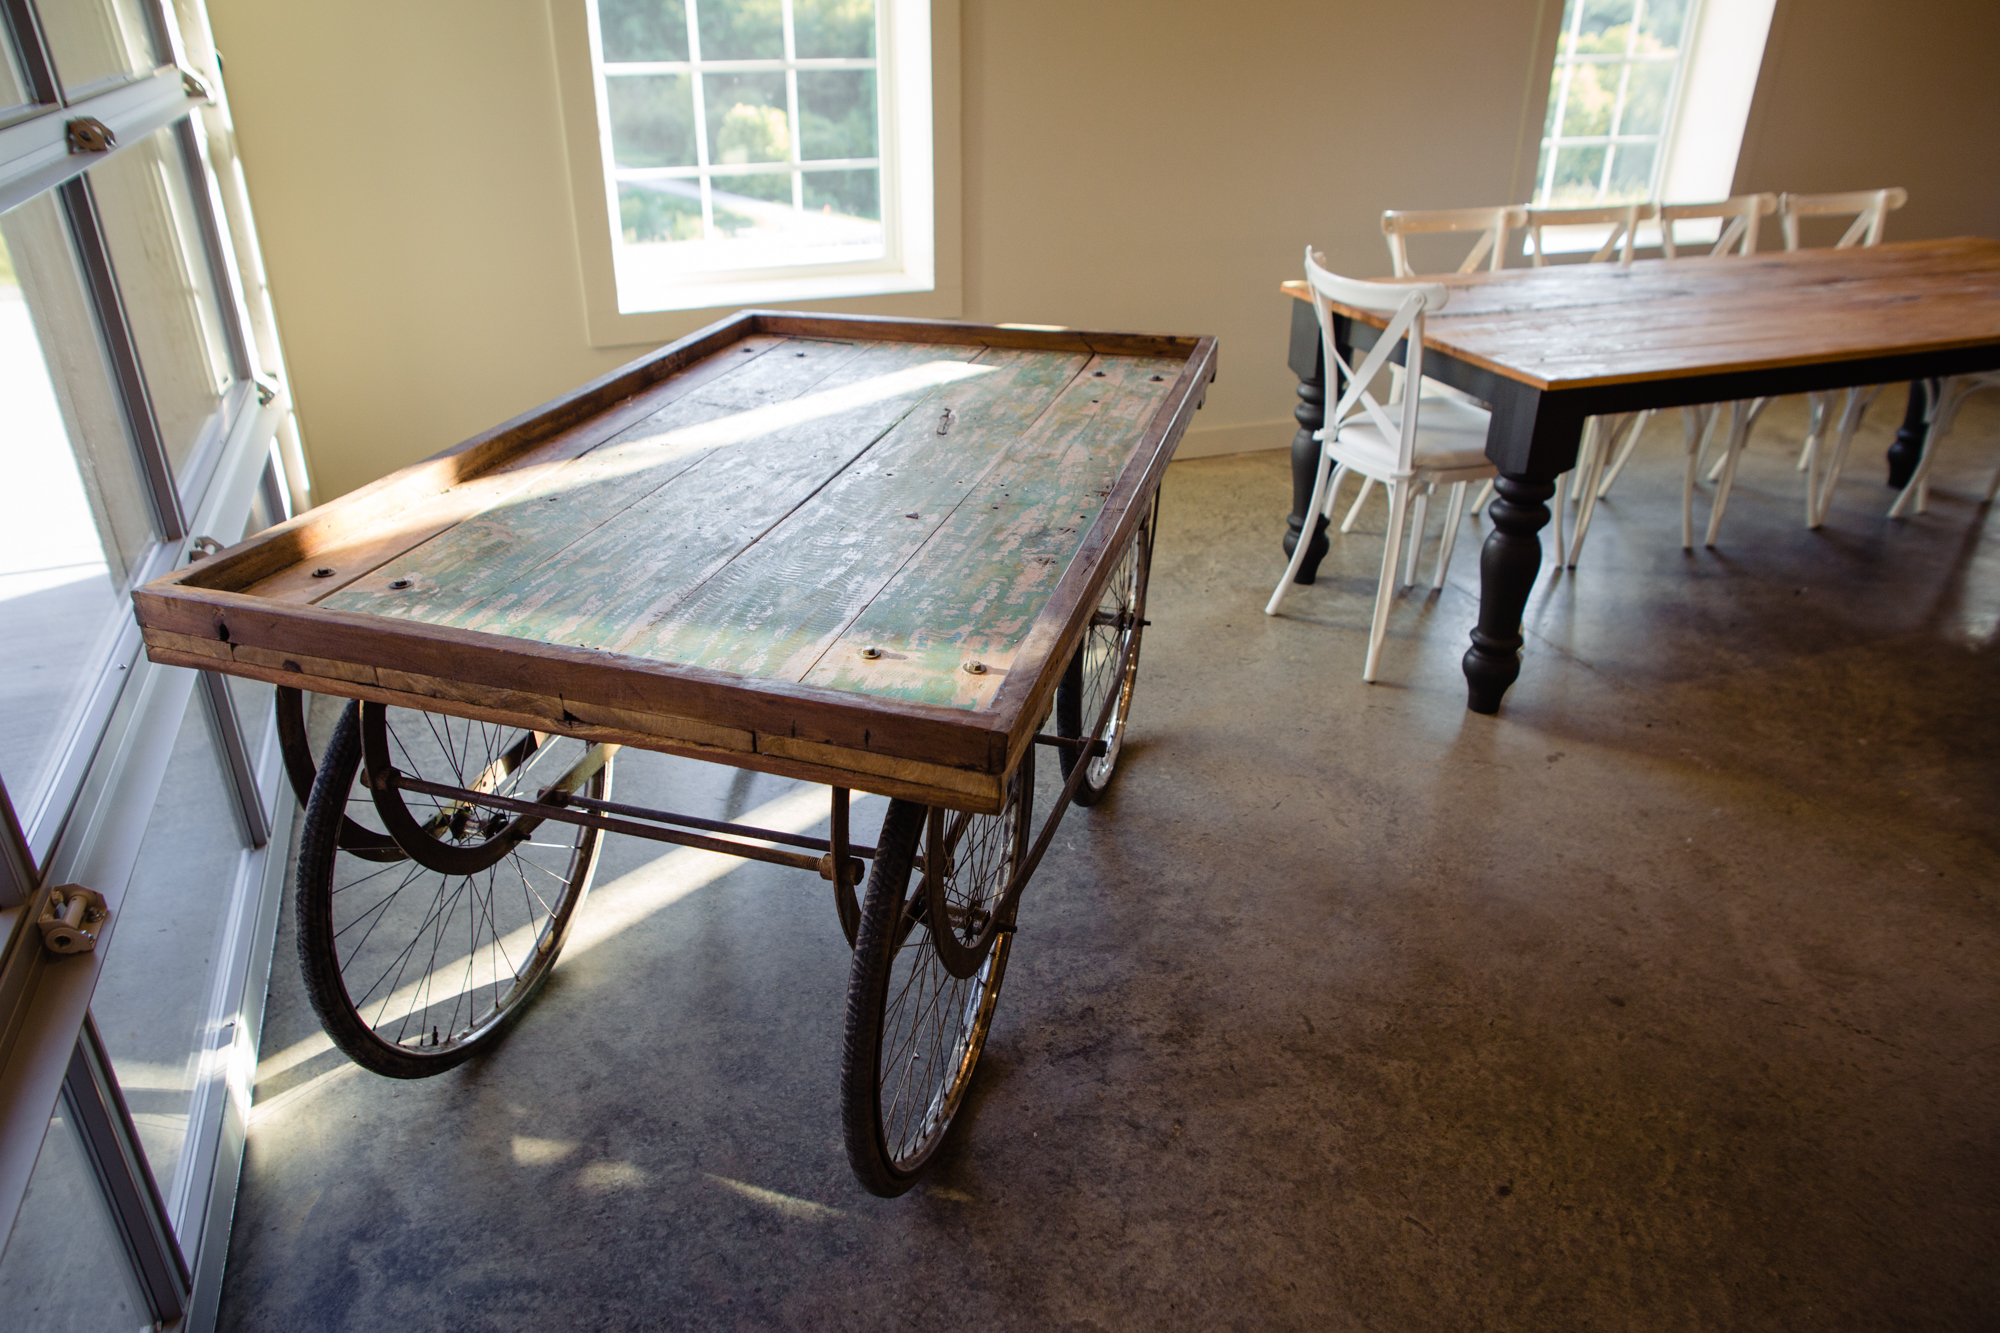 Cranford Hollow's vintage dessert table